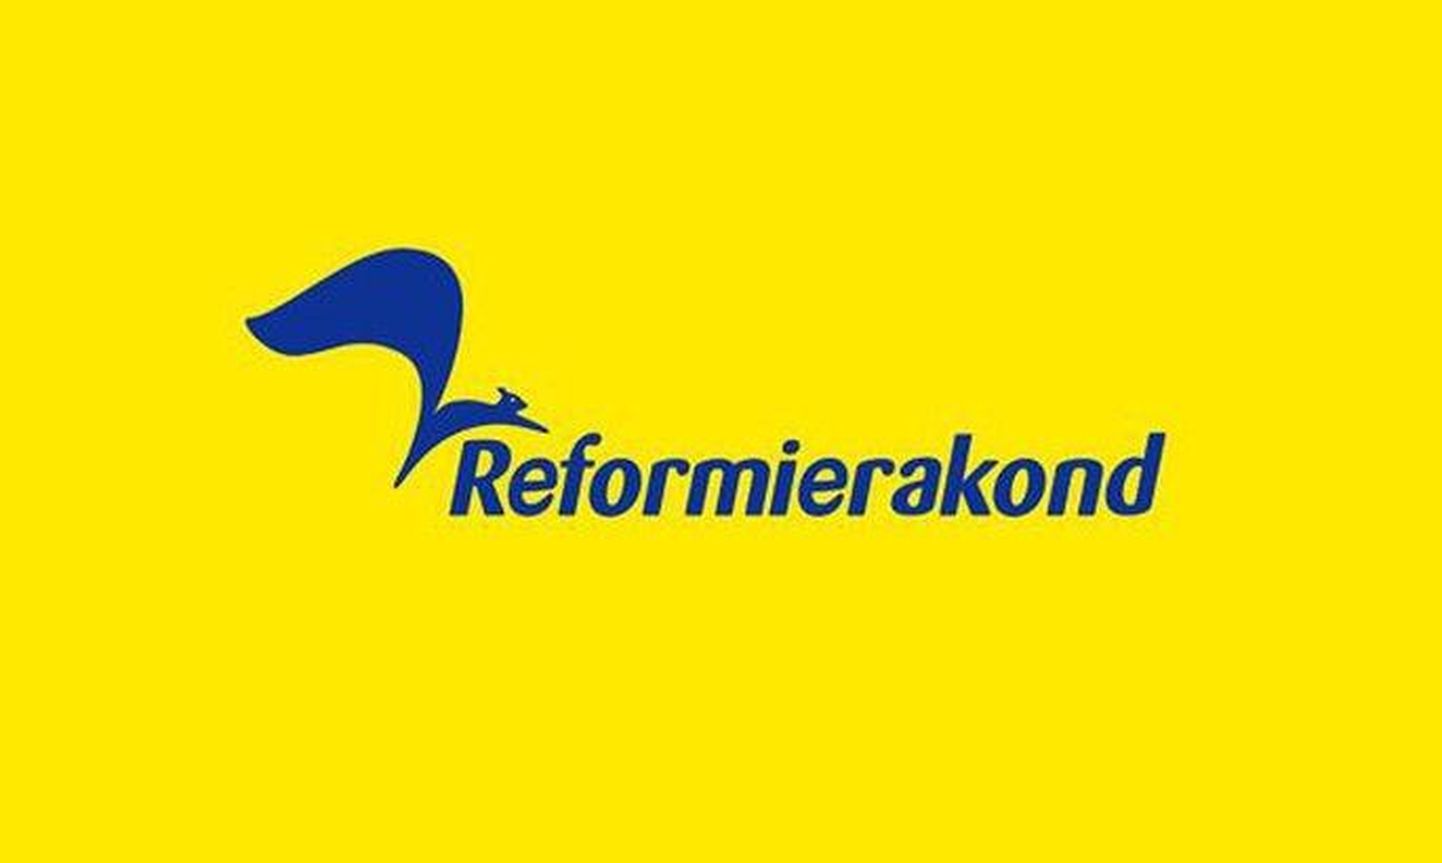 Reformierakonna logo.